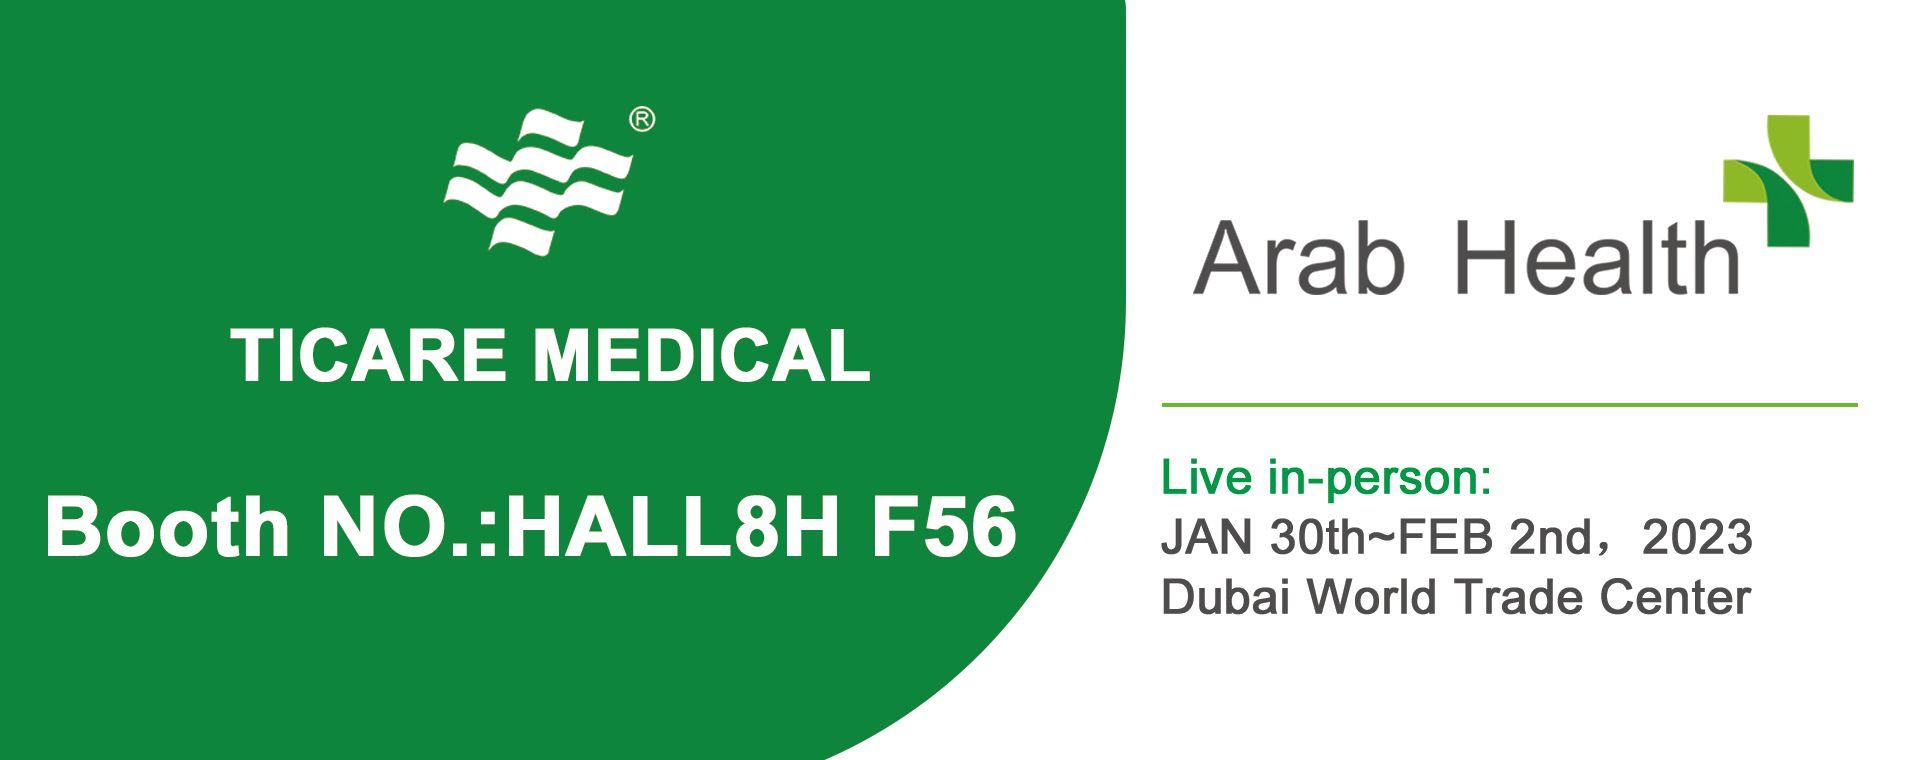 2023 Arab Health Exhibition in Dubai